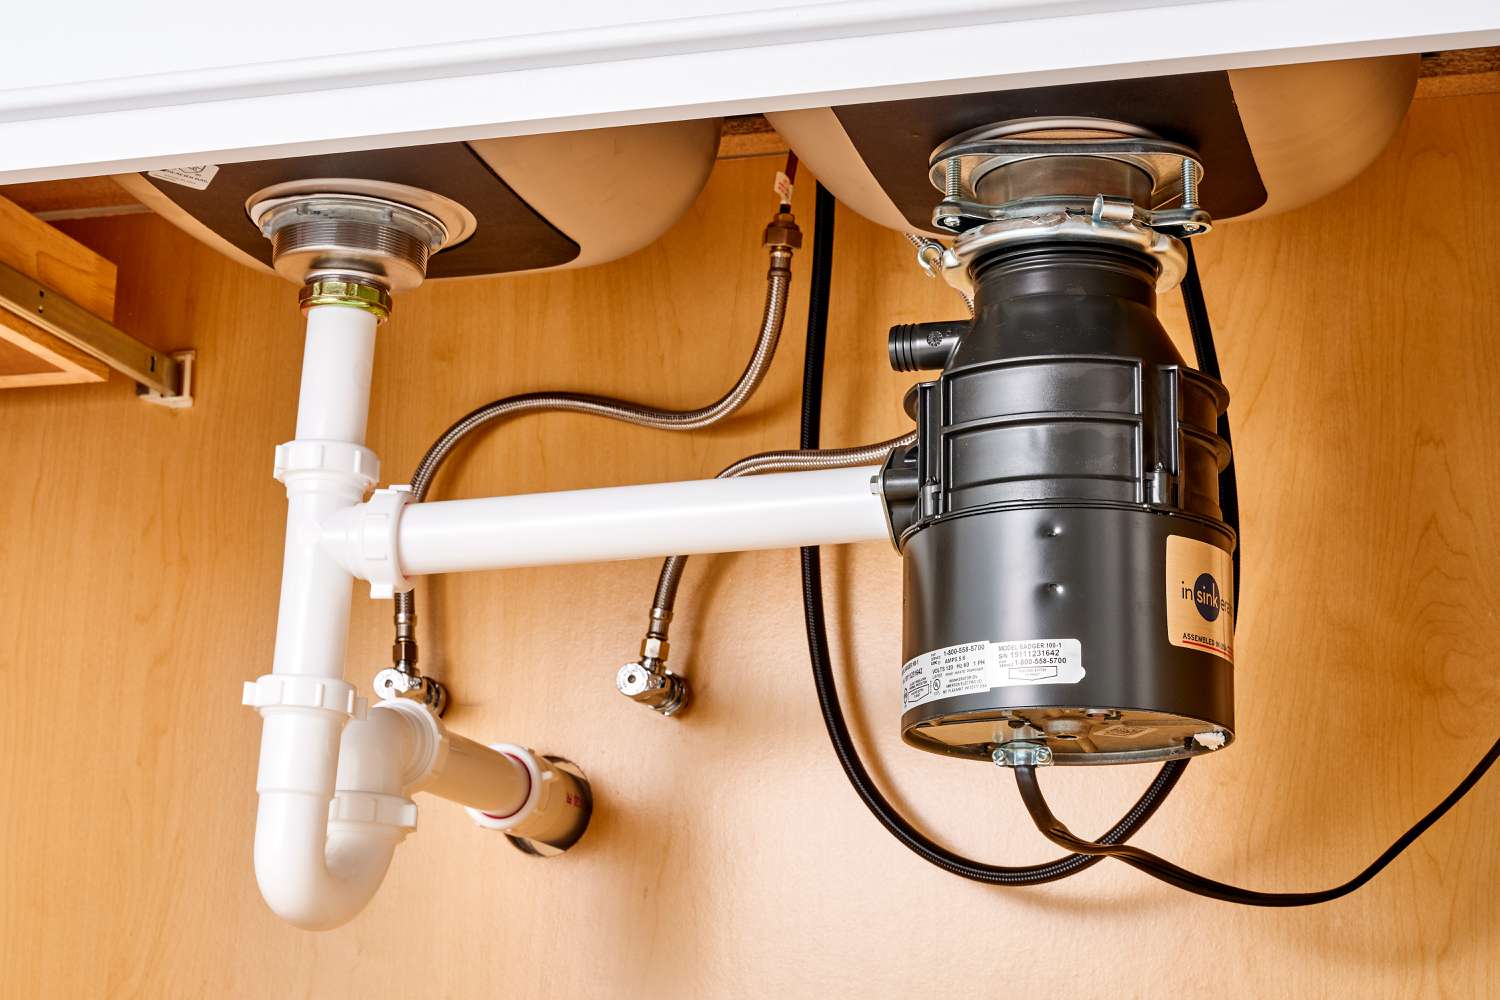 Do Plumbers Install Undermount Sinks?